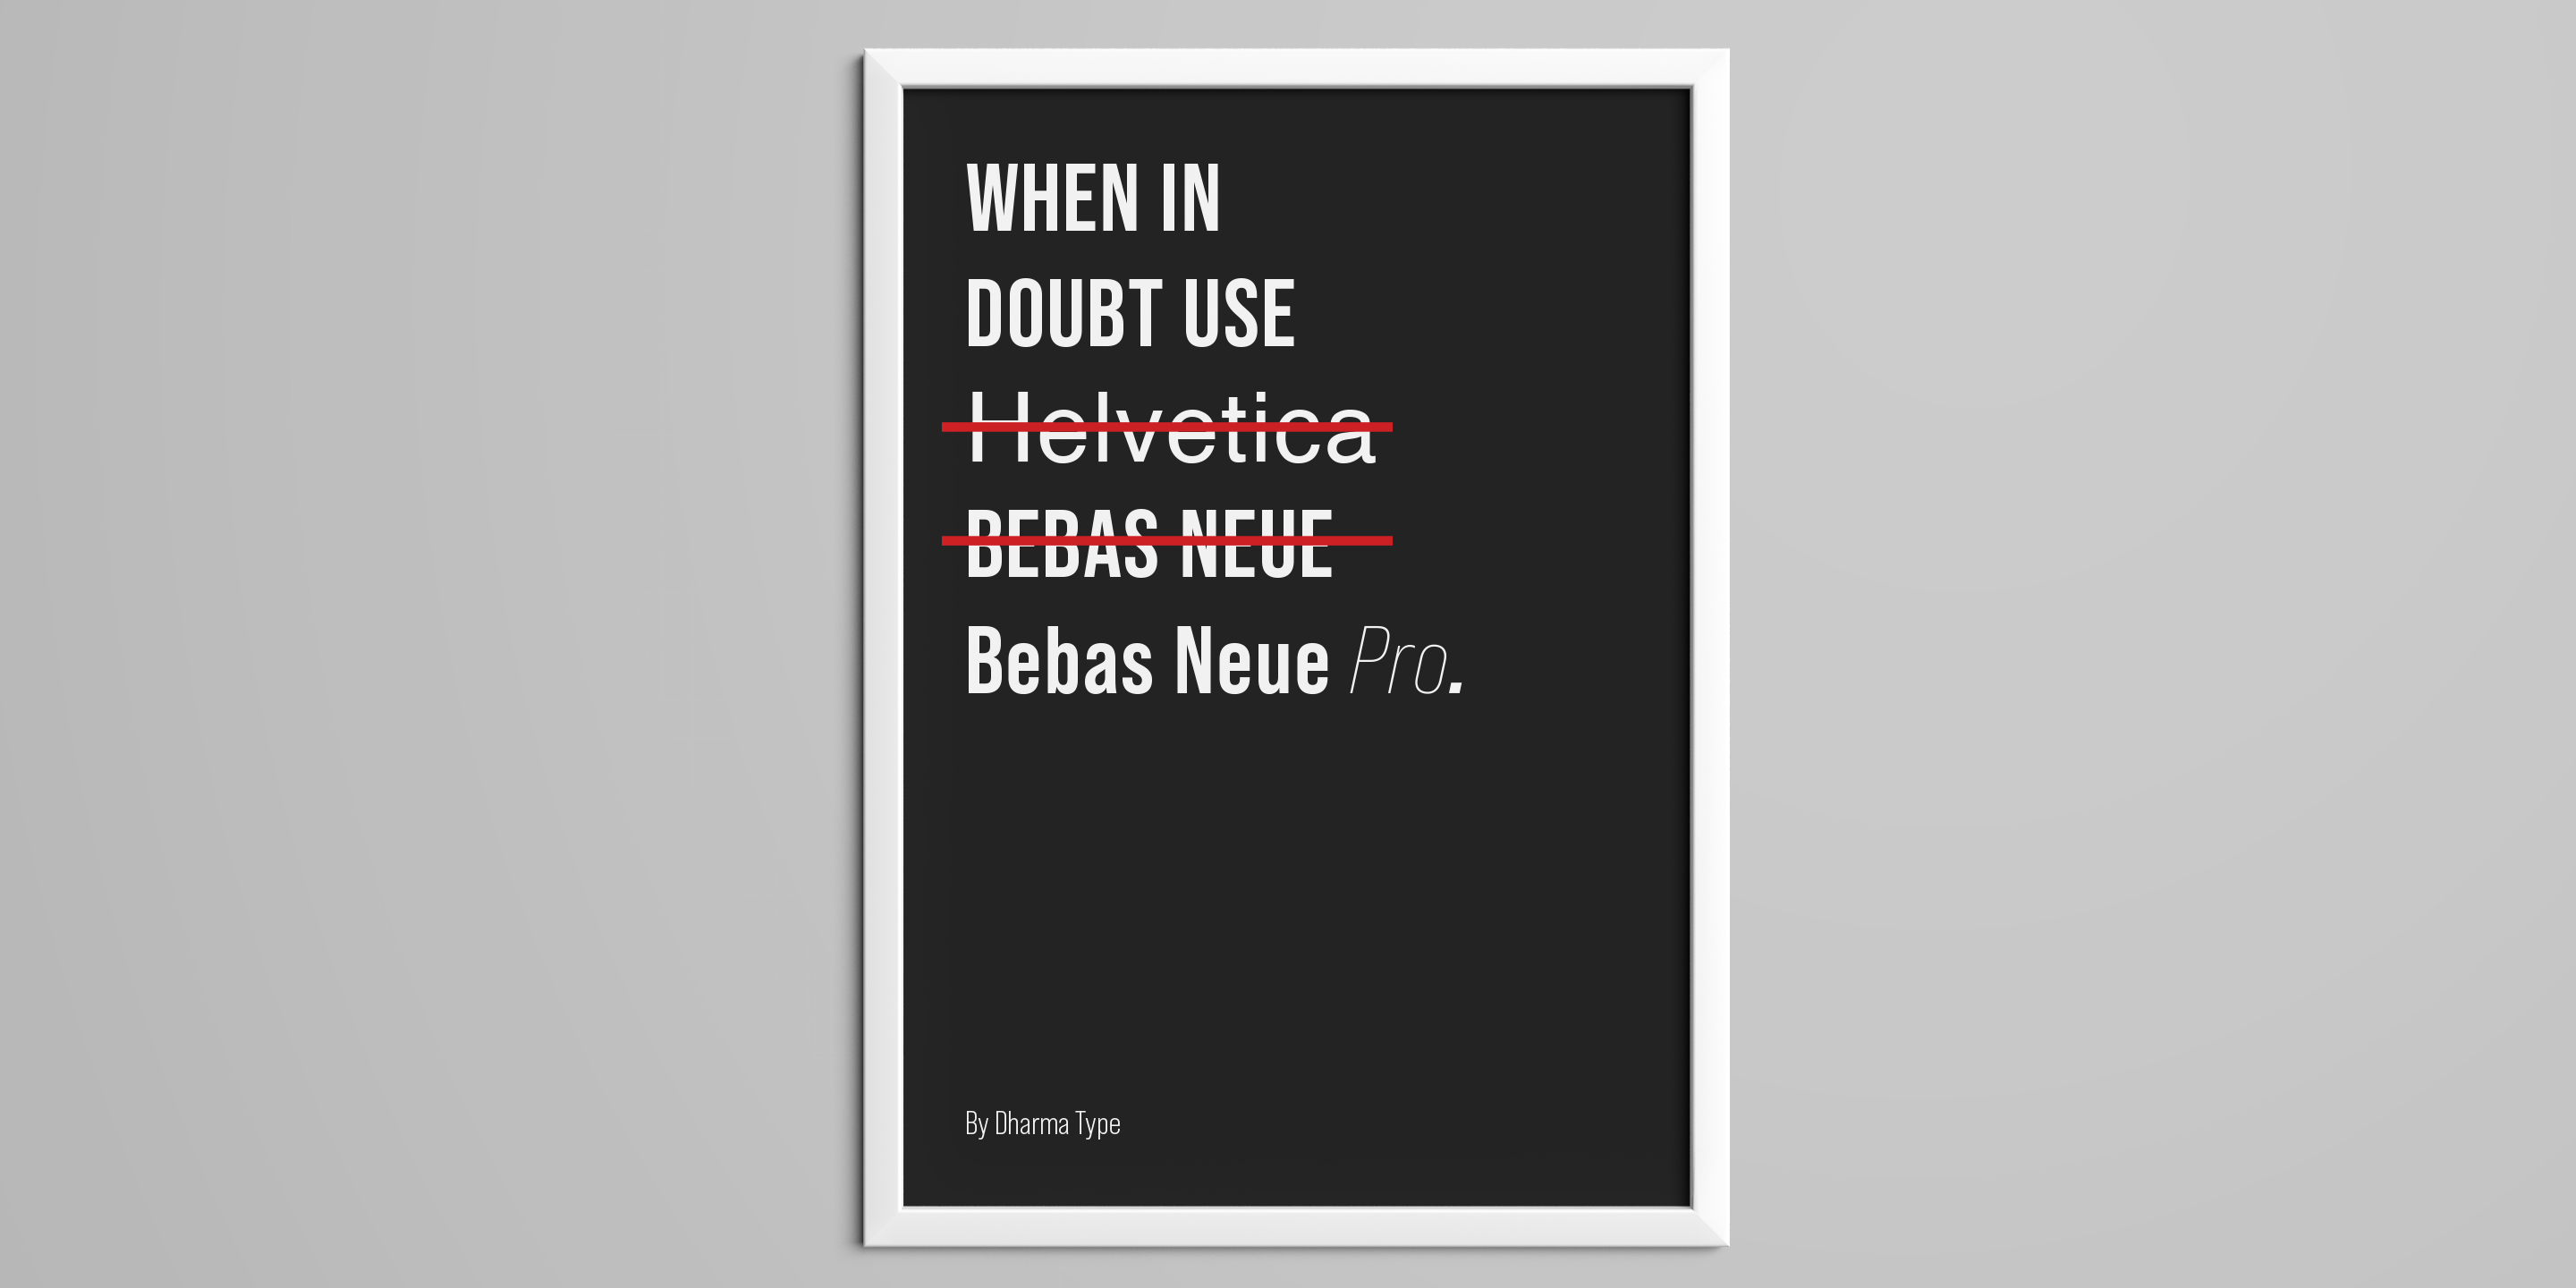 Bebas neue Pro. Шрифт типа bebas. Bebas neue Pro font.